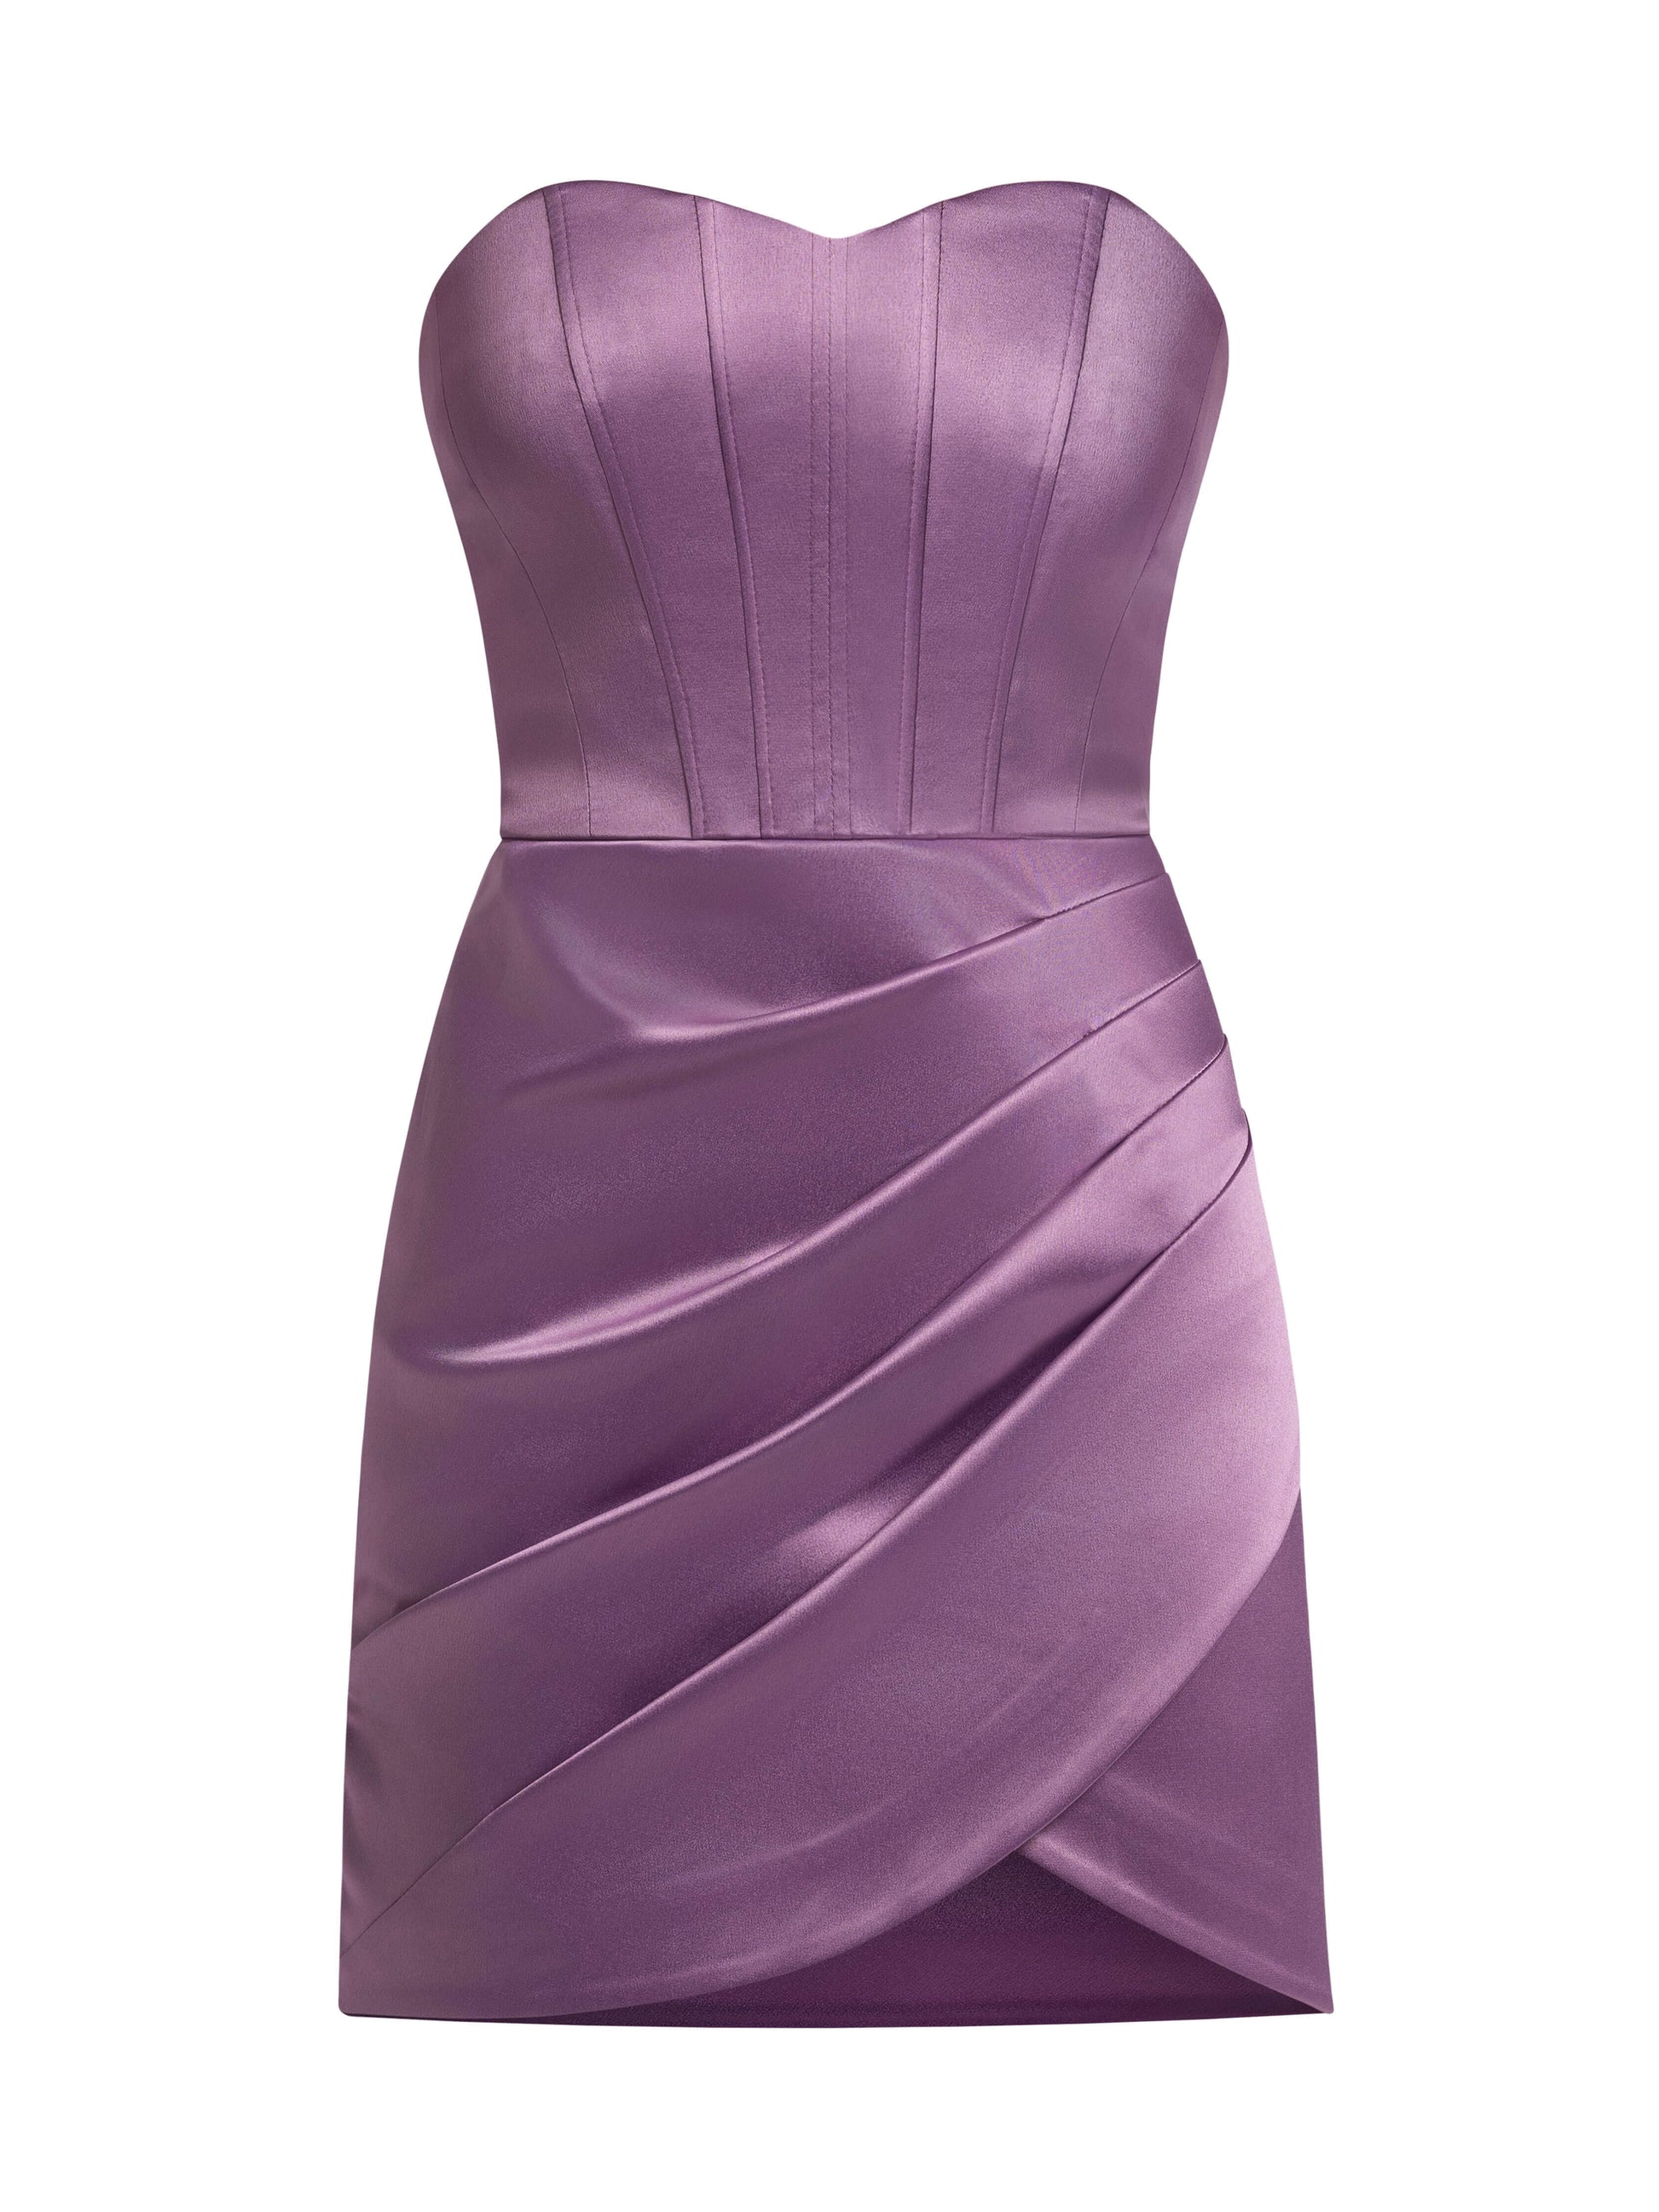 A Touch of Glamour Mini Dress - Posh Purple by Tia Dorraine Women's Luxury Fashion Designer Clothing Brand